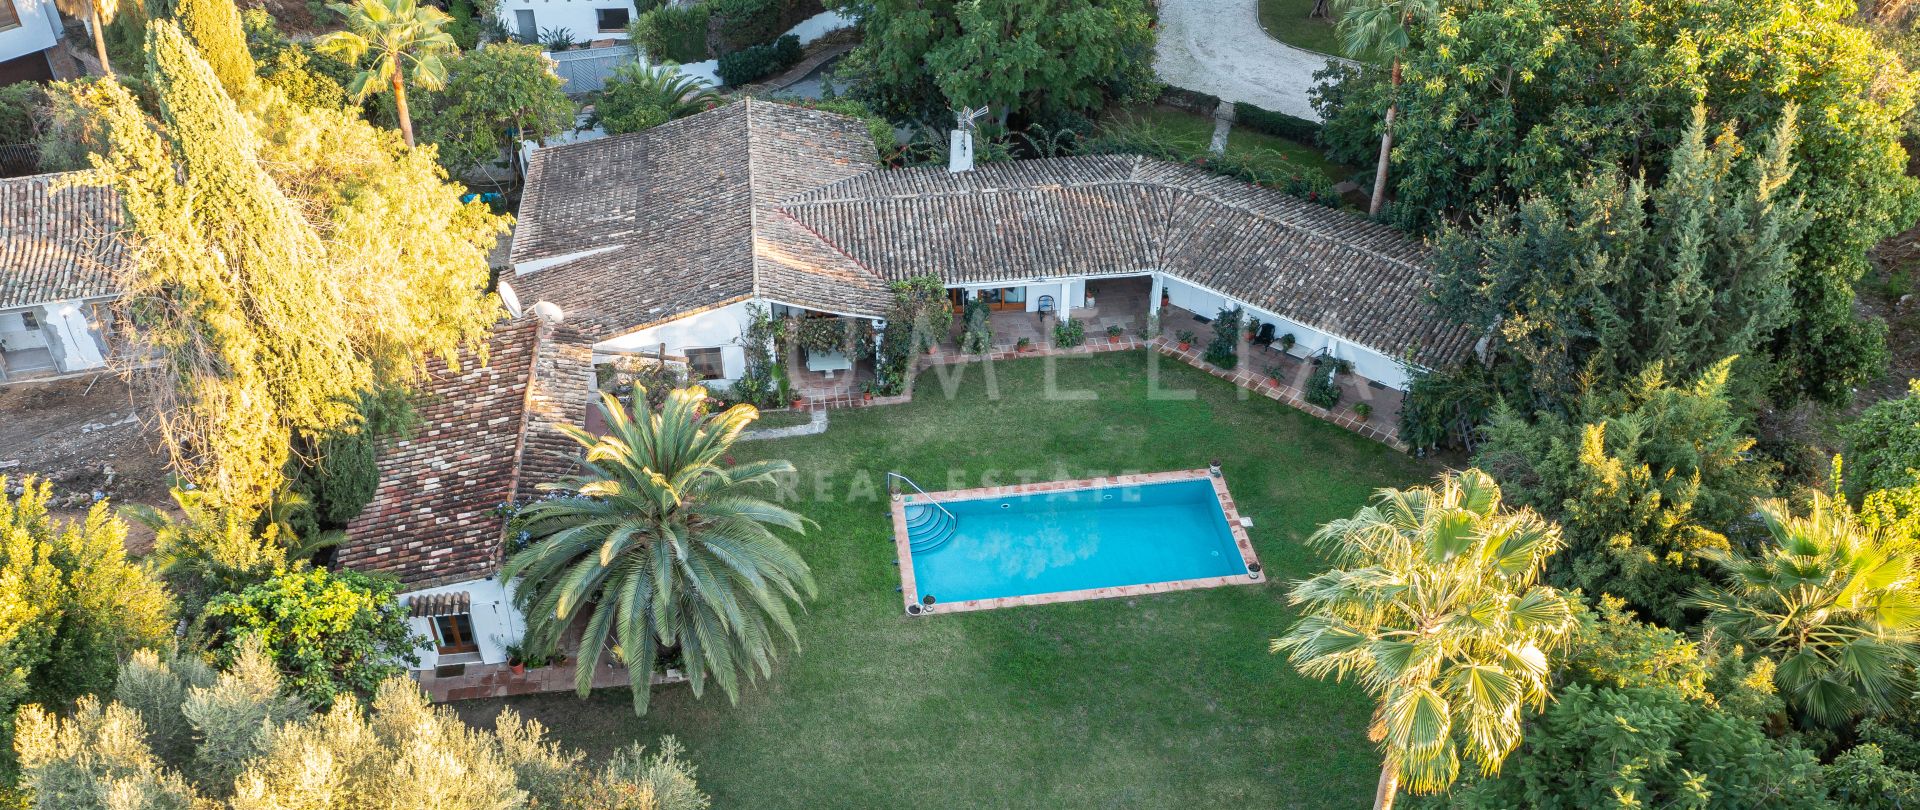 Charming front-line golf luxury villa with high potential in Los Naranjos Golf, Nueva Andalucia, Marbella.